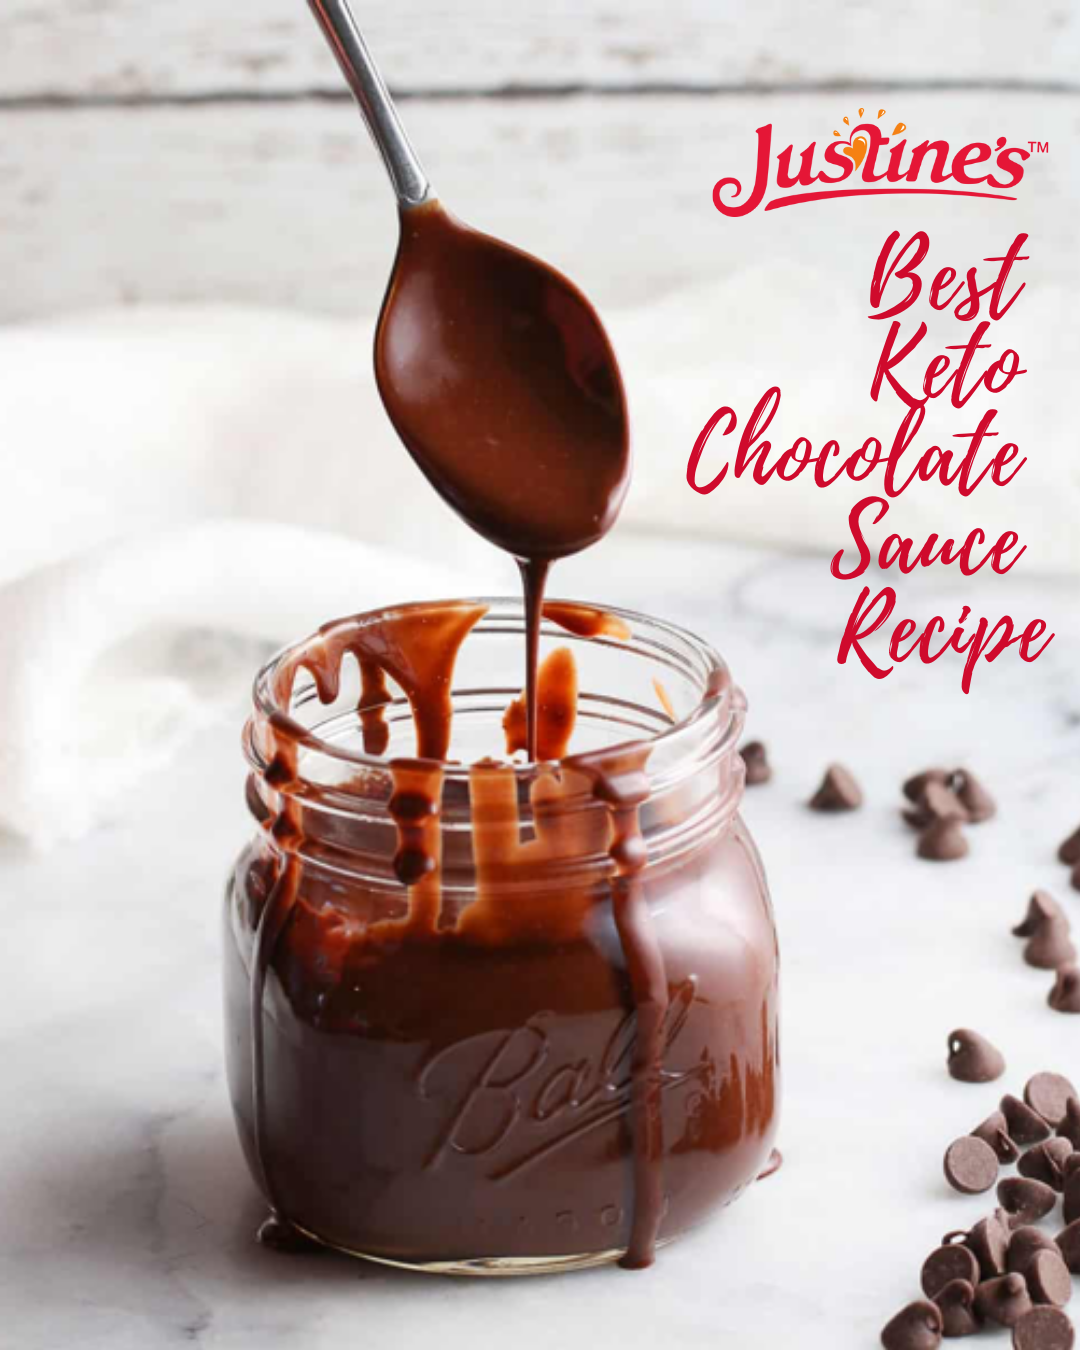 Justine’s Best Keto Chocolate Sauce Recipe